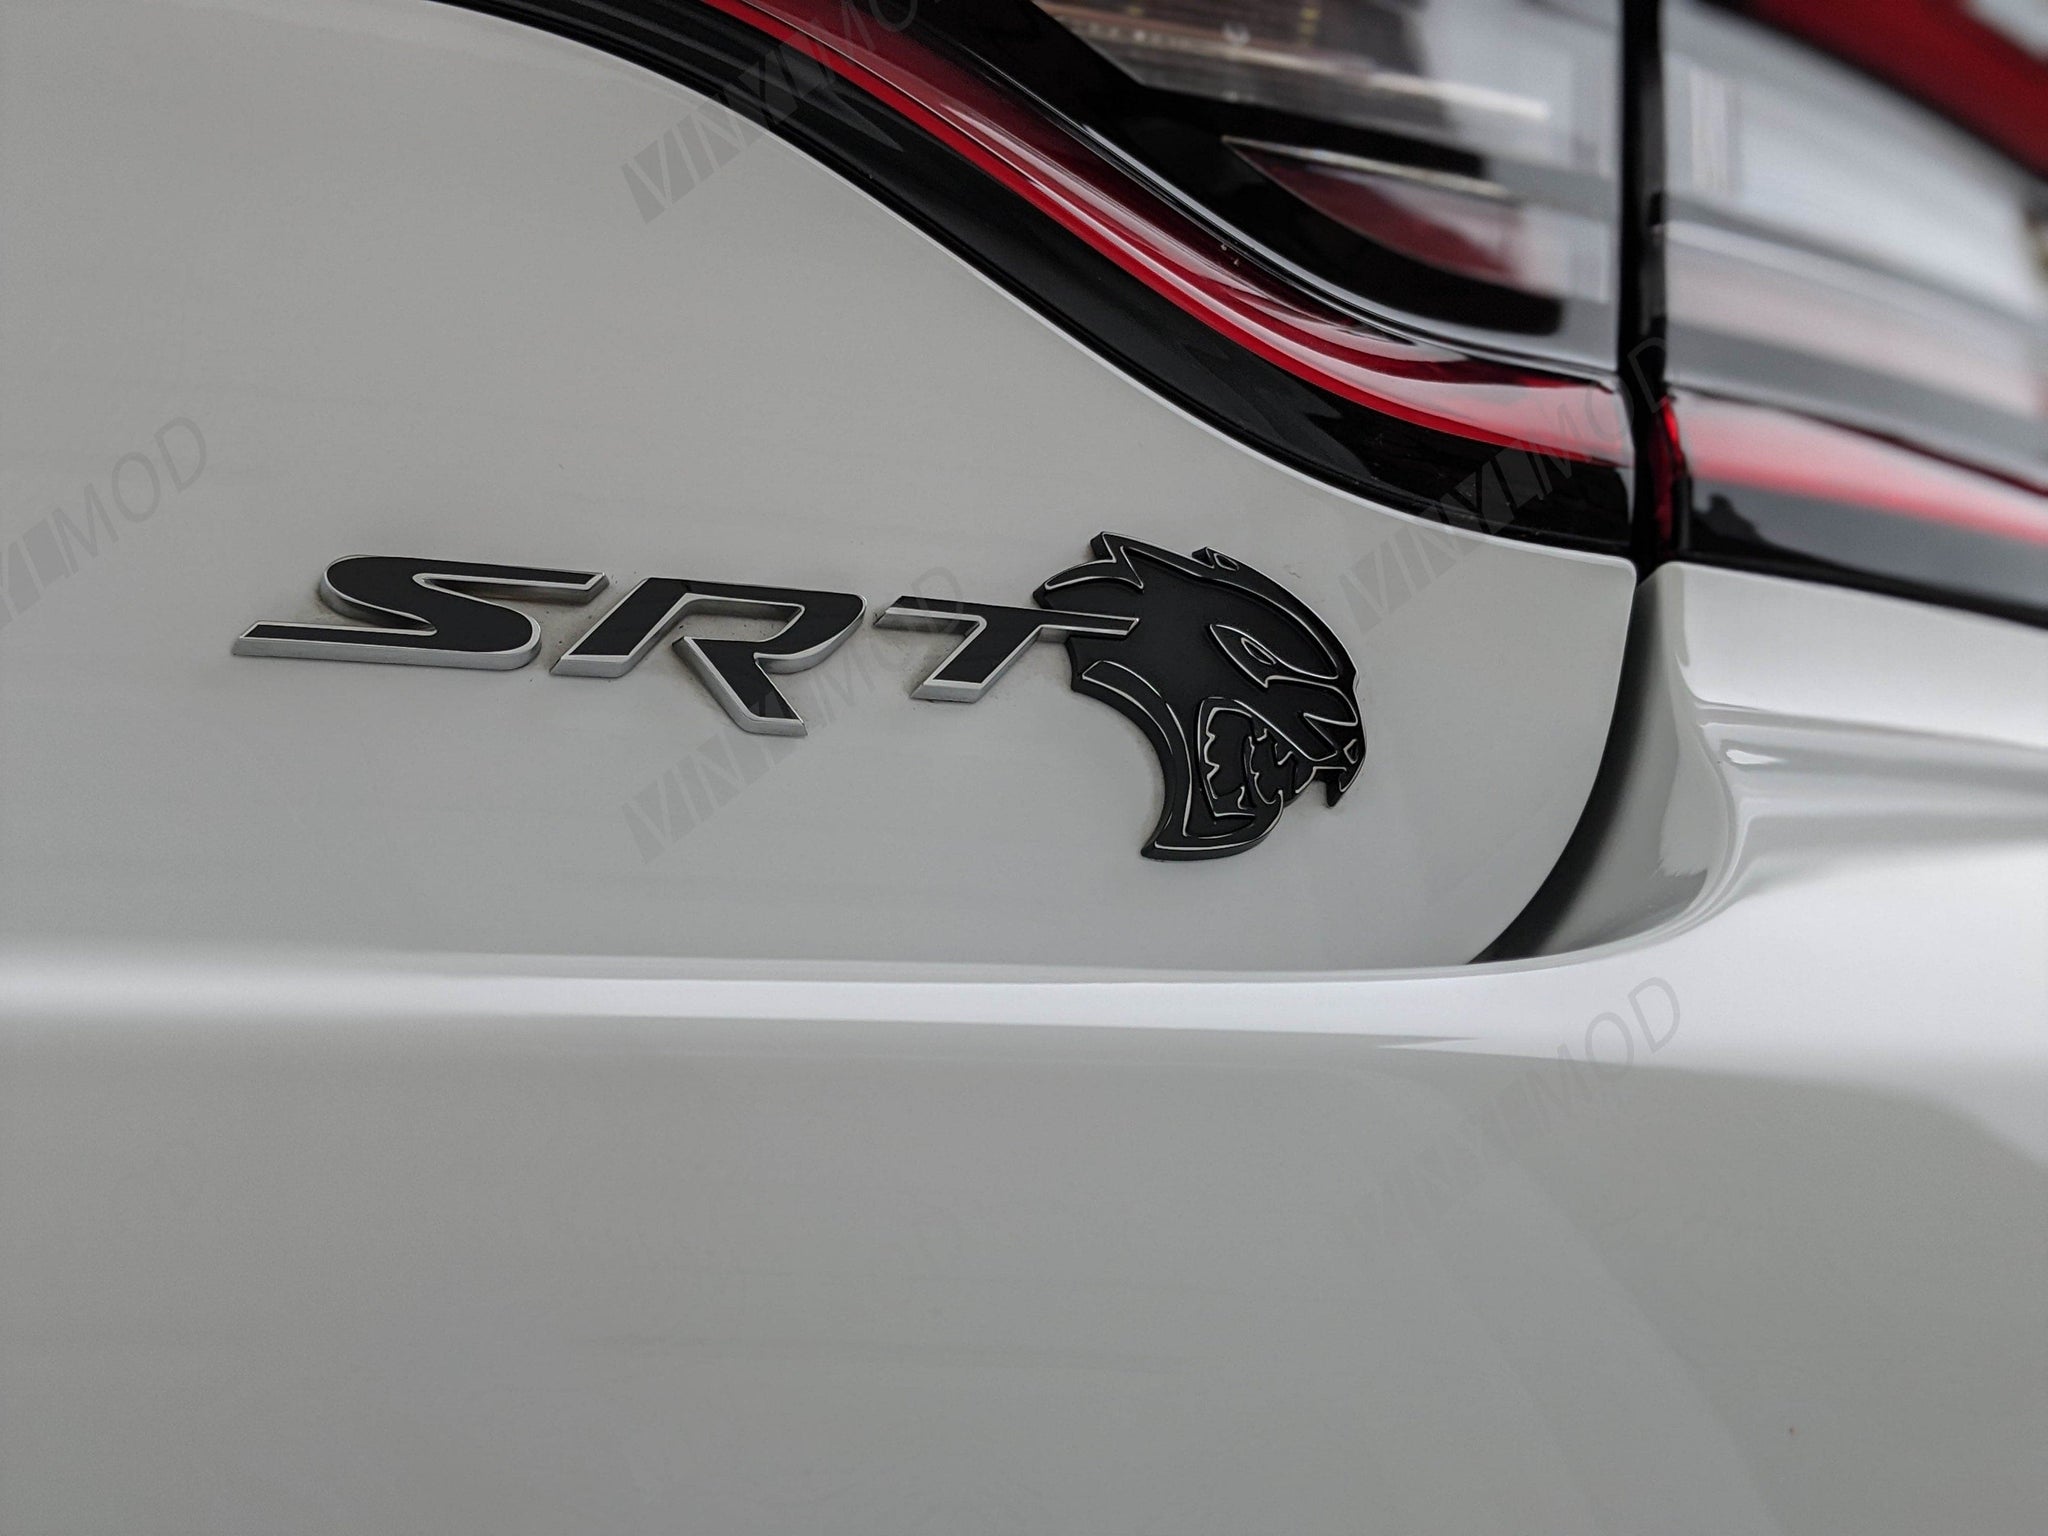 2011+ (7th Gen) Dodge Charger - Rear SRT Cat Emblem VinylMod Overlays